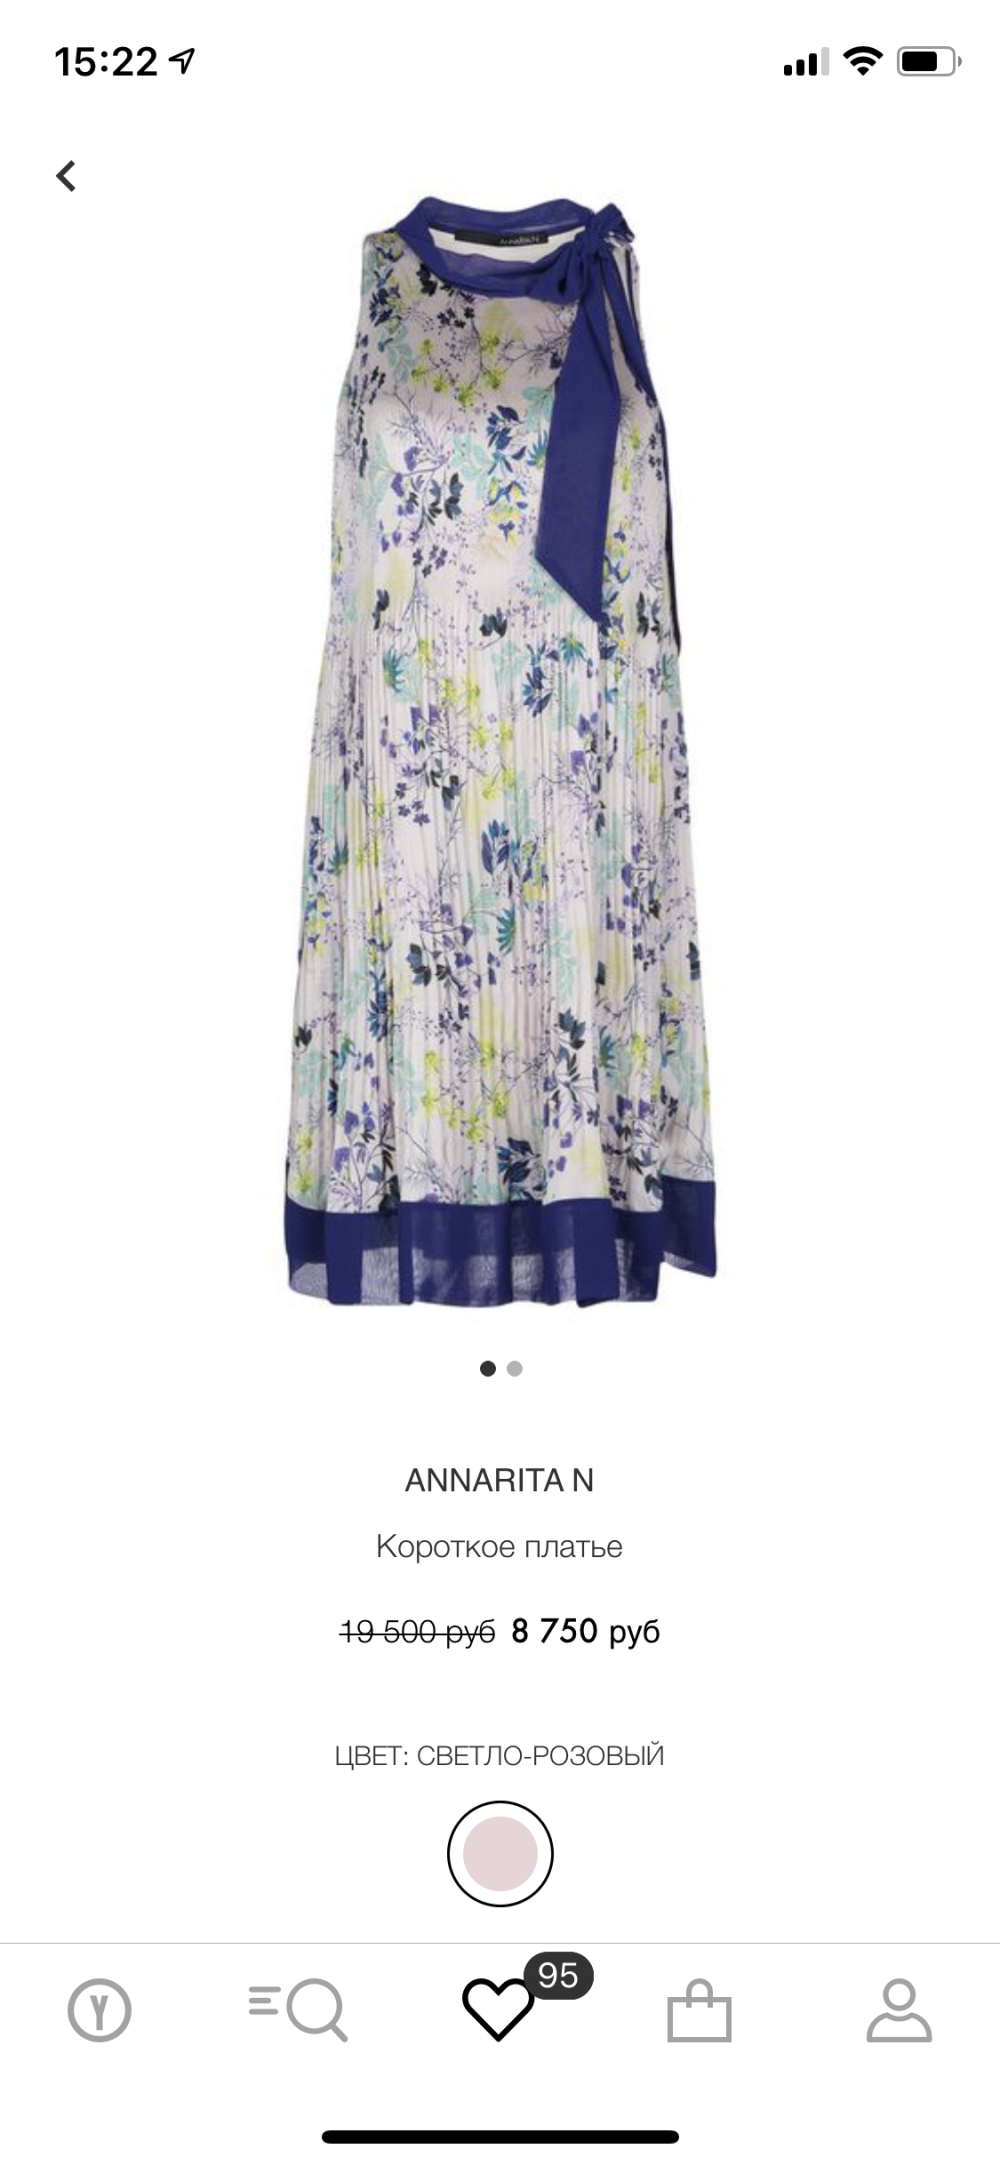 AnnaRita N 44 it платье